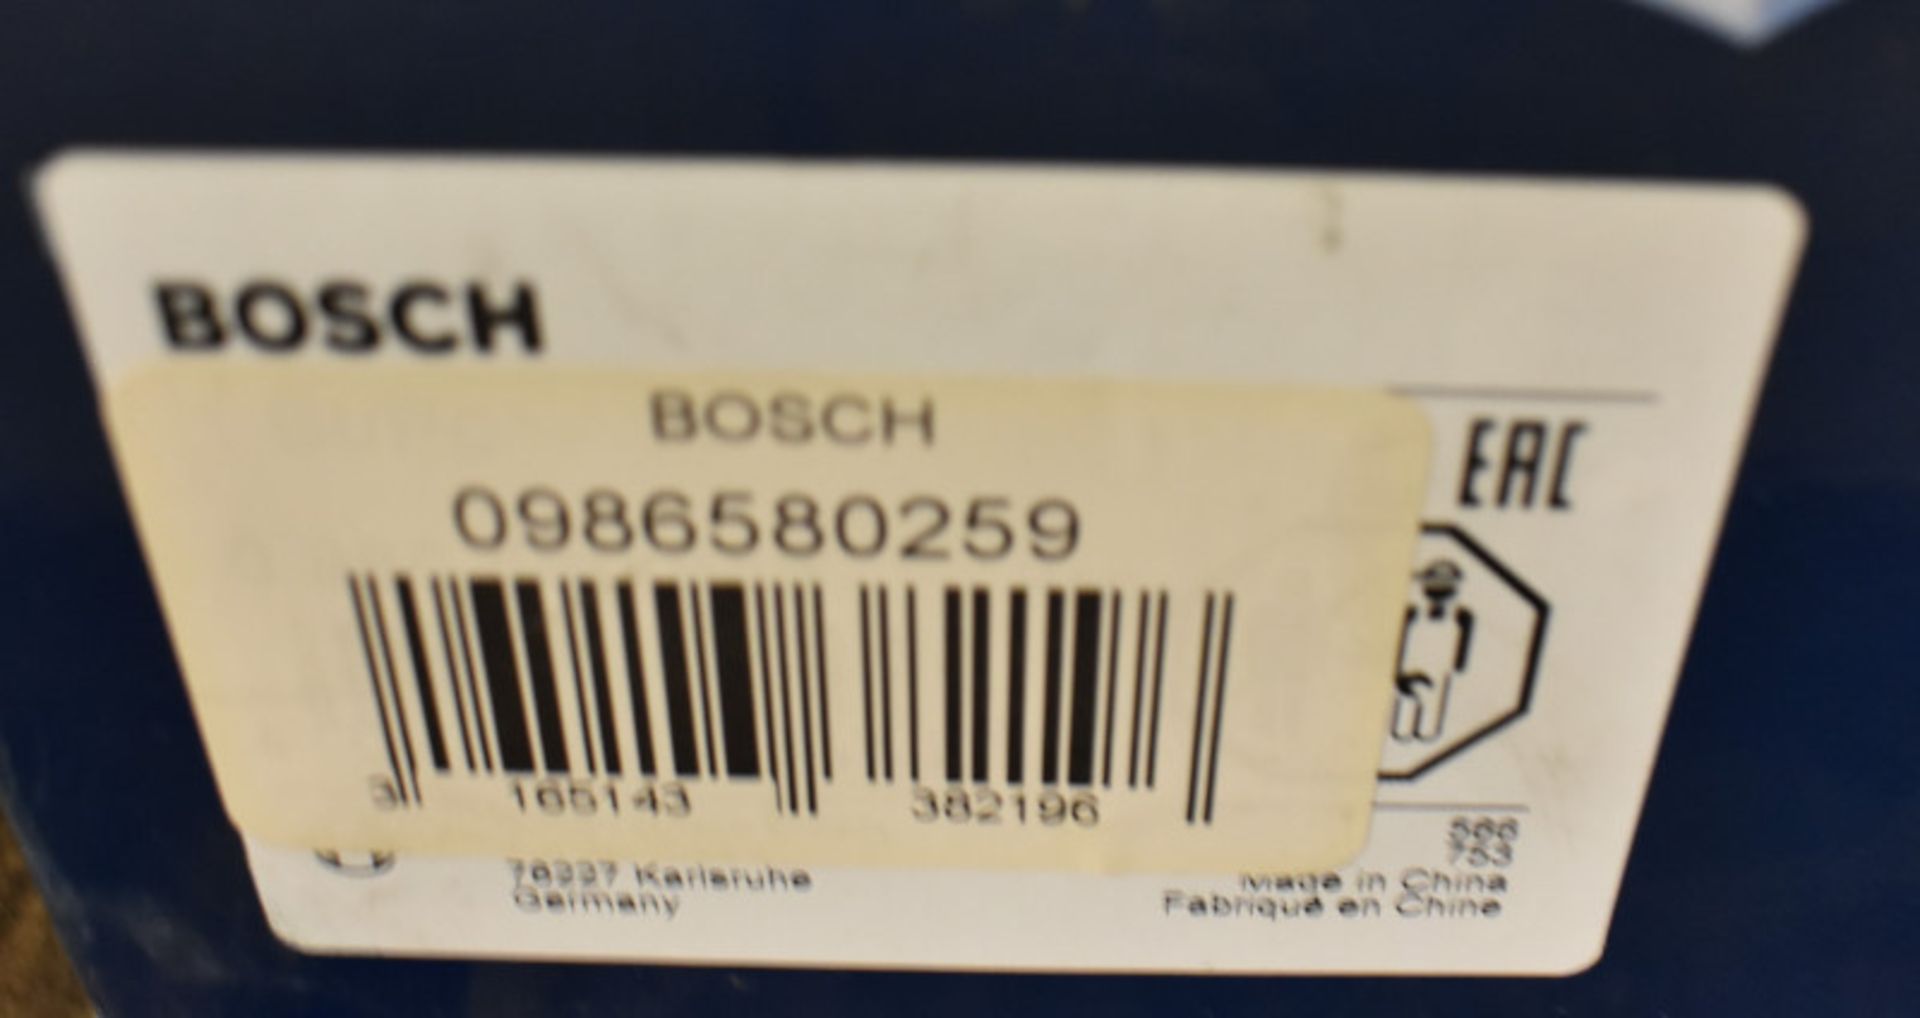 Bosch 0986580259 Electric Fuel Pump - Image 2 of 2